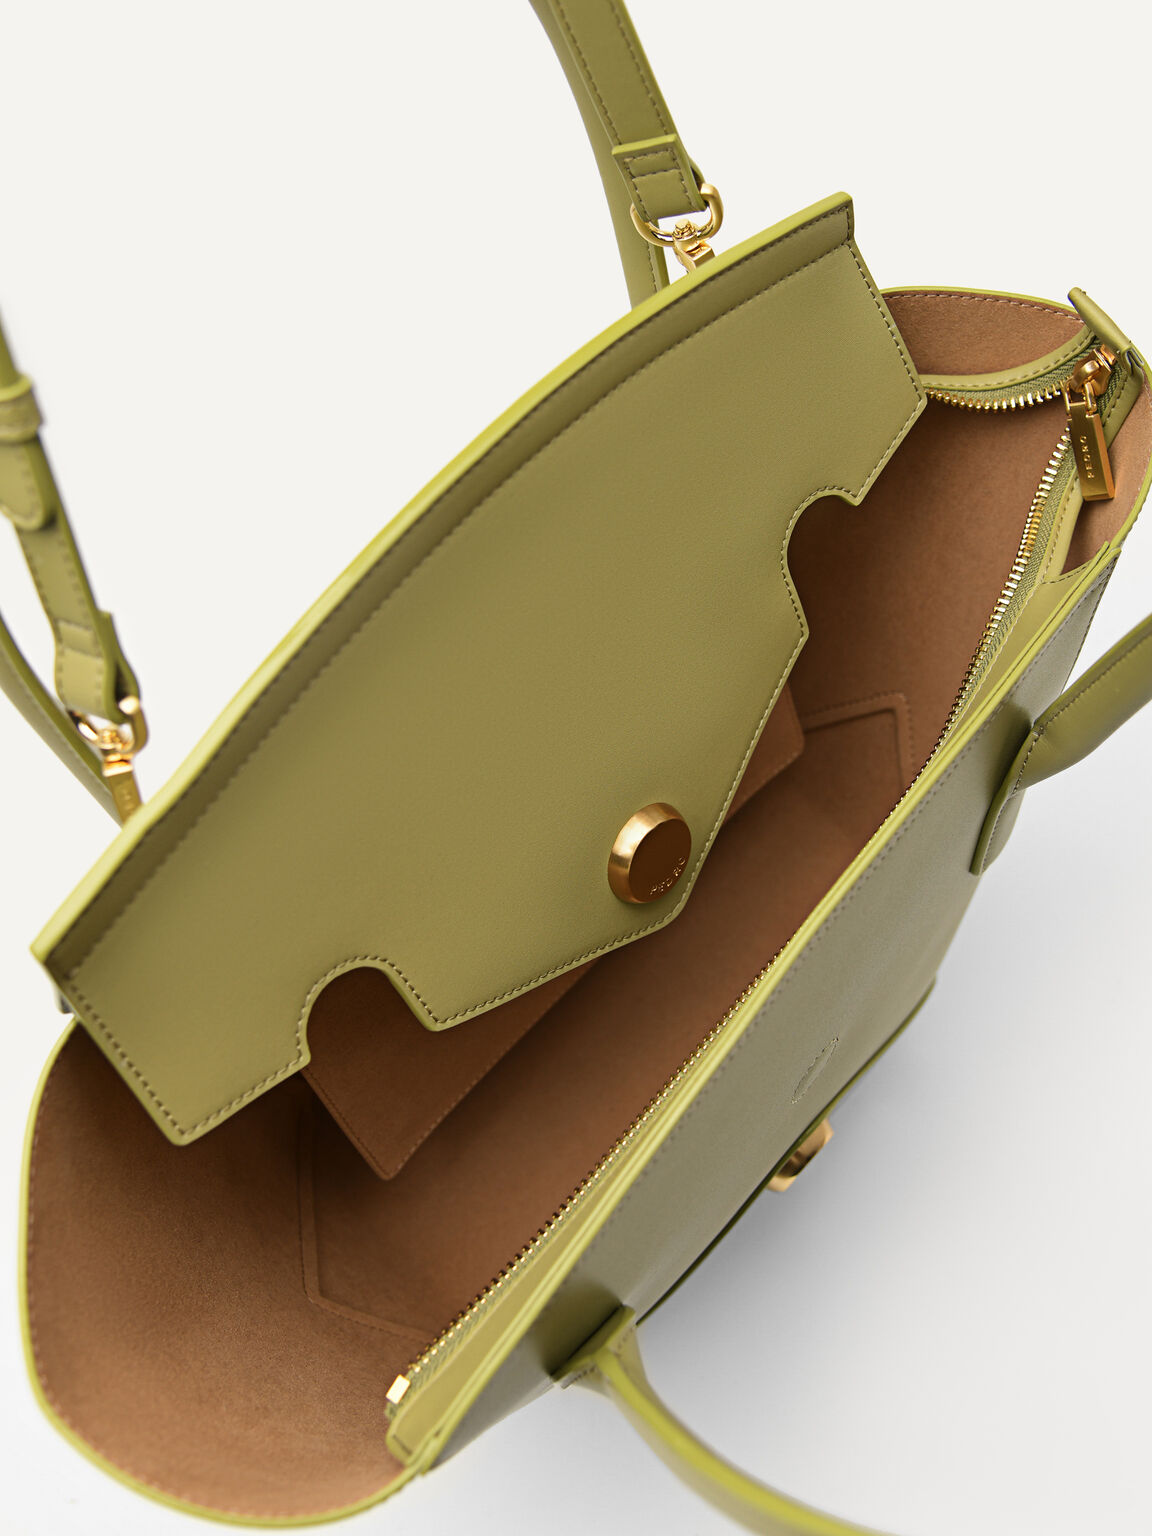 Orb Leather Handbag - PEDRO EU